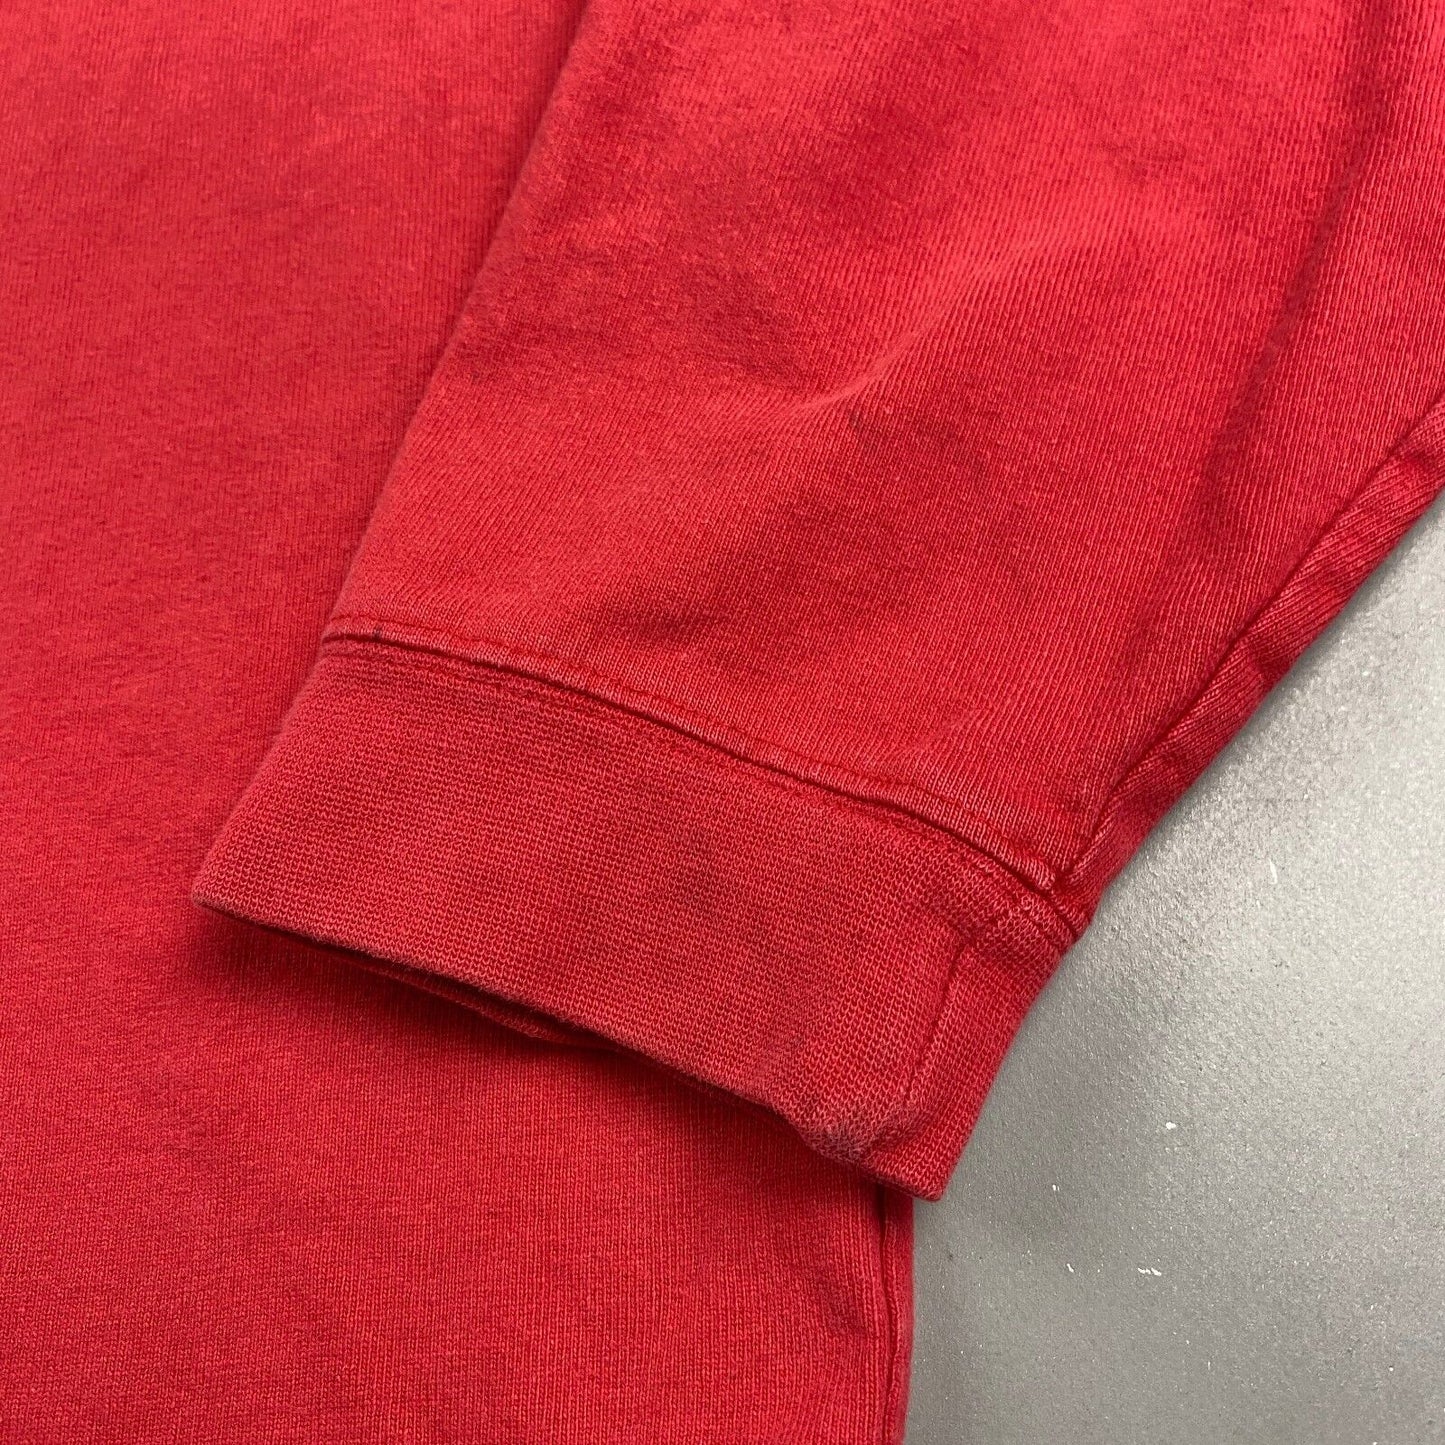 VINTAGE GAP Blank Red Turtle Neck Long Sleeve T-Shirt sz XL Men Adult